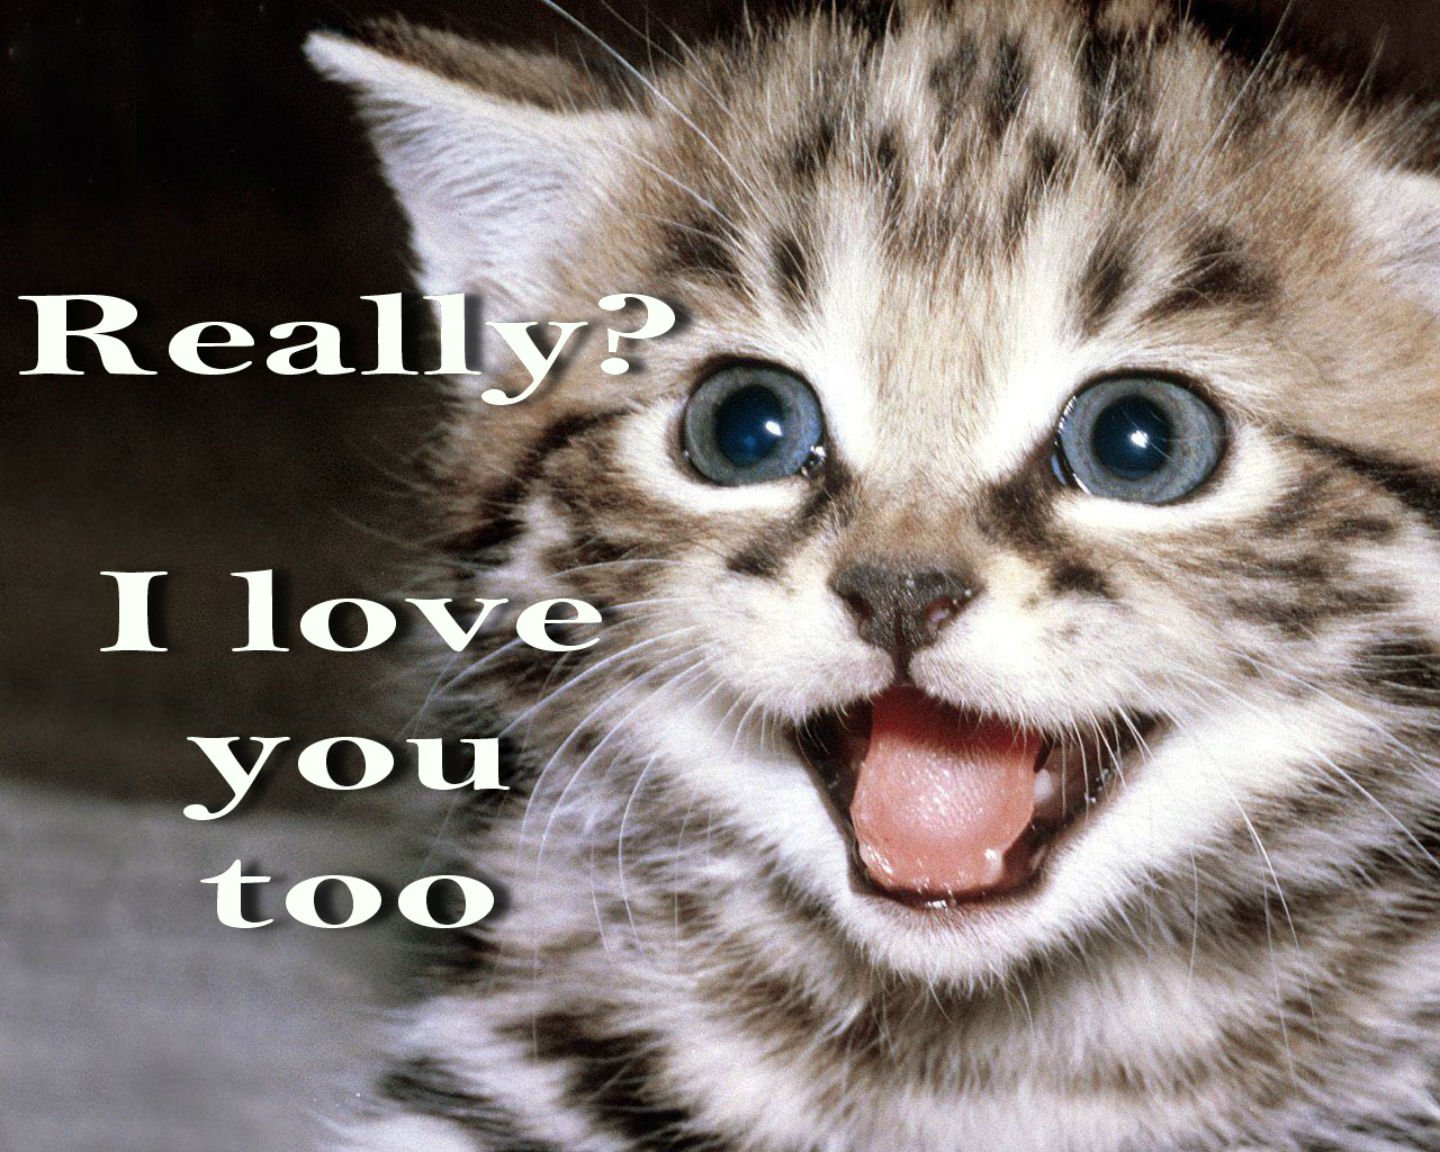 cat meme quote funny humor grumpy kitten mood love wallpaper